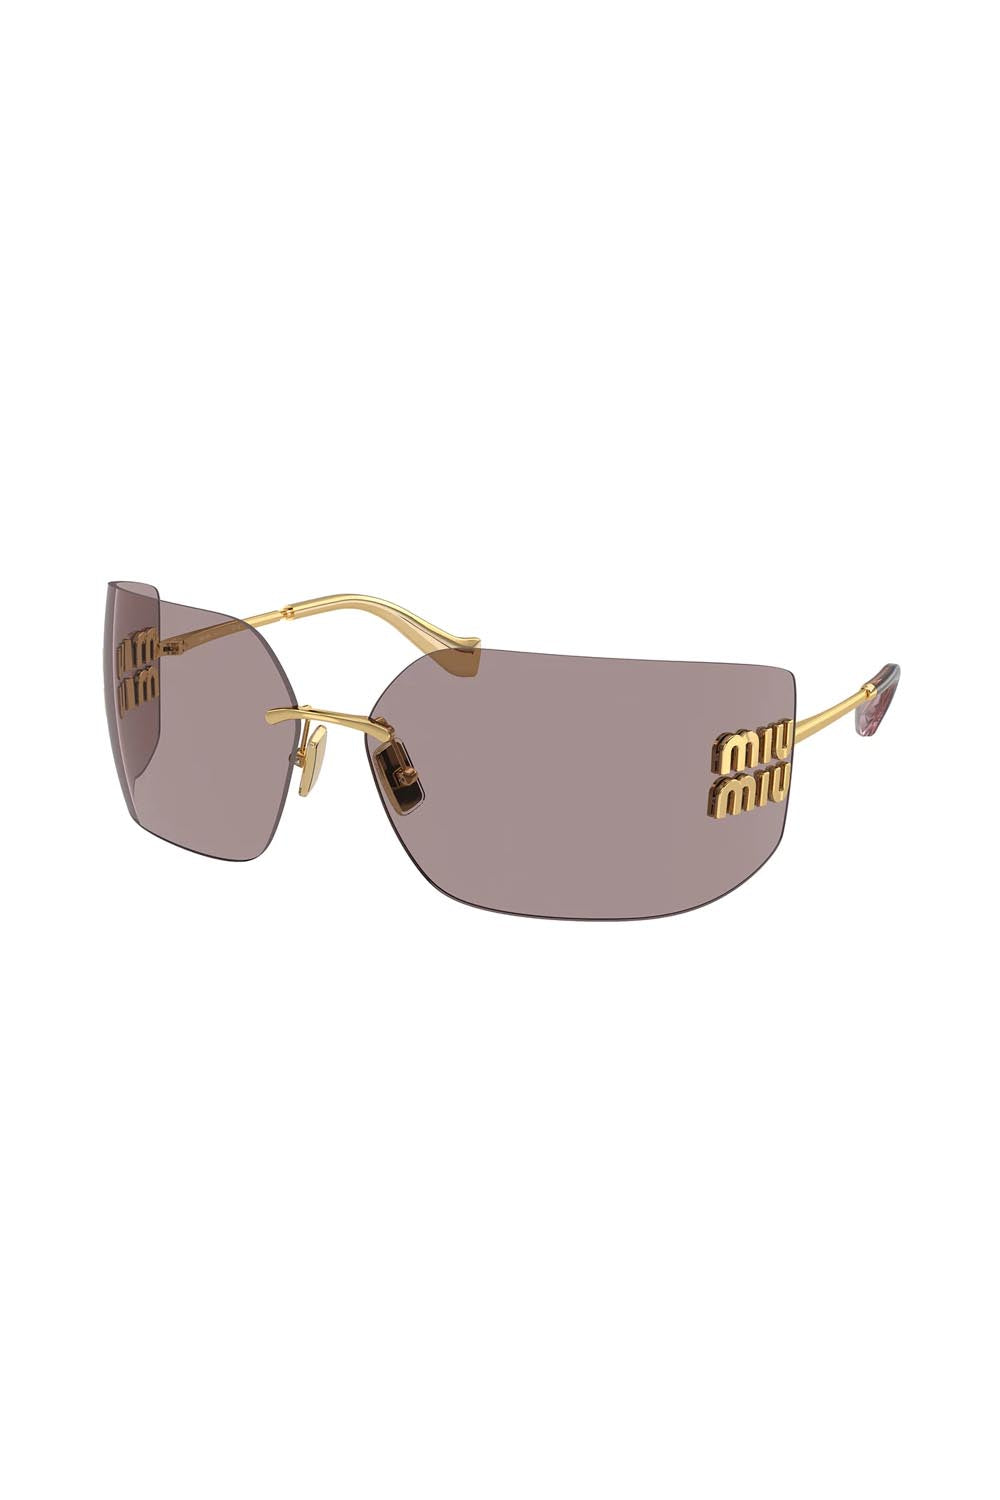 Miu Miu Sunglasses MU 54YS Gold Light Purple